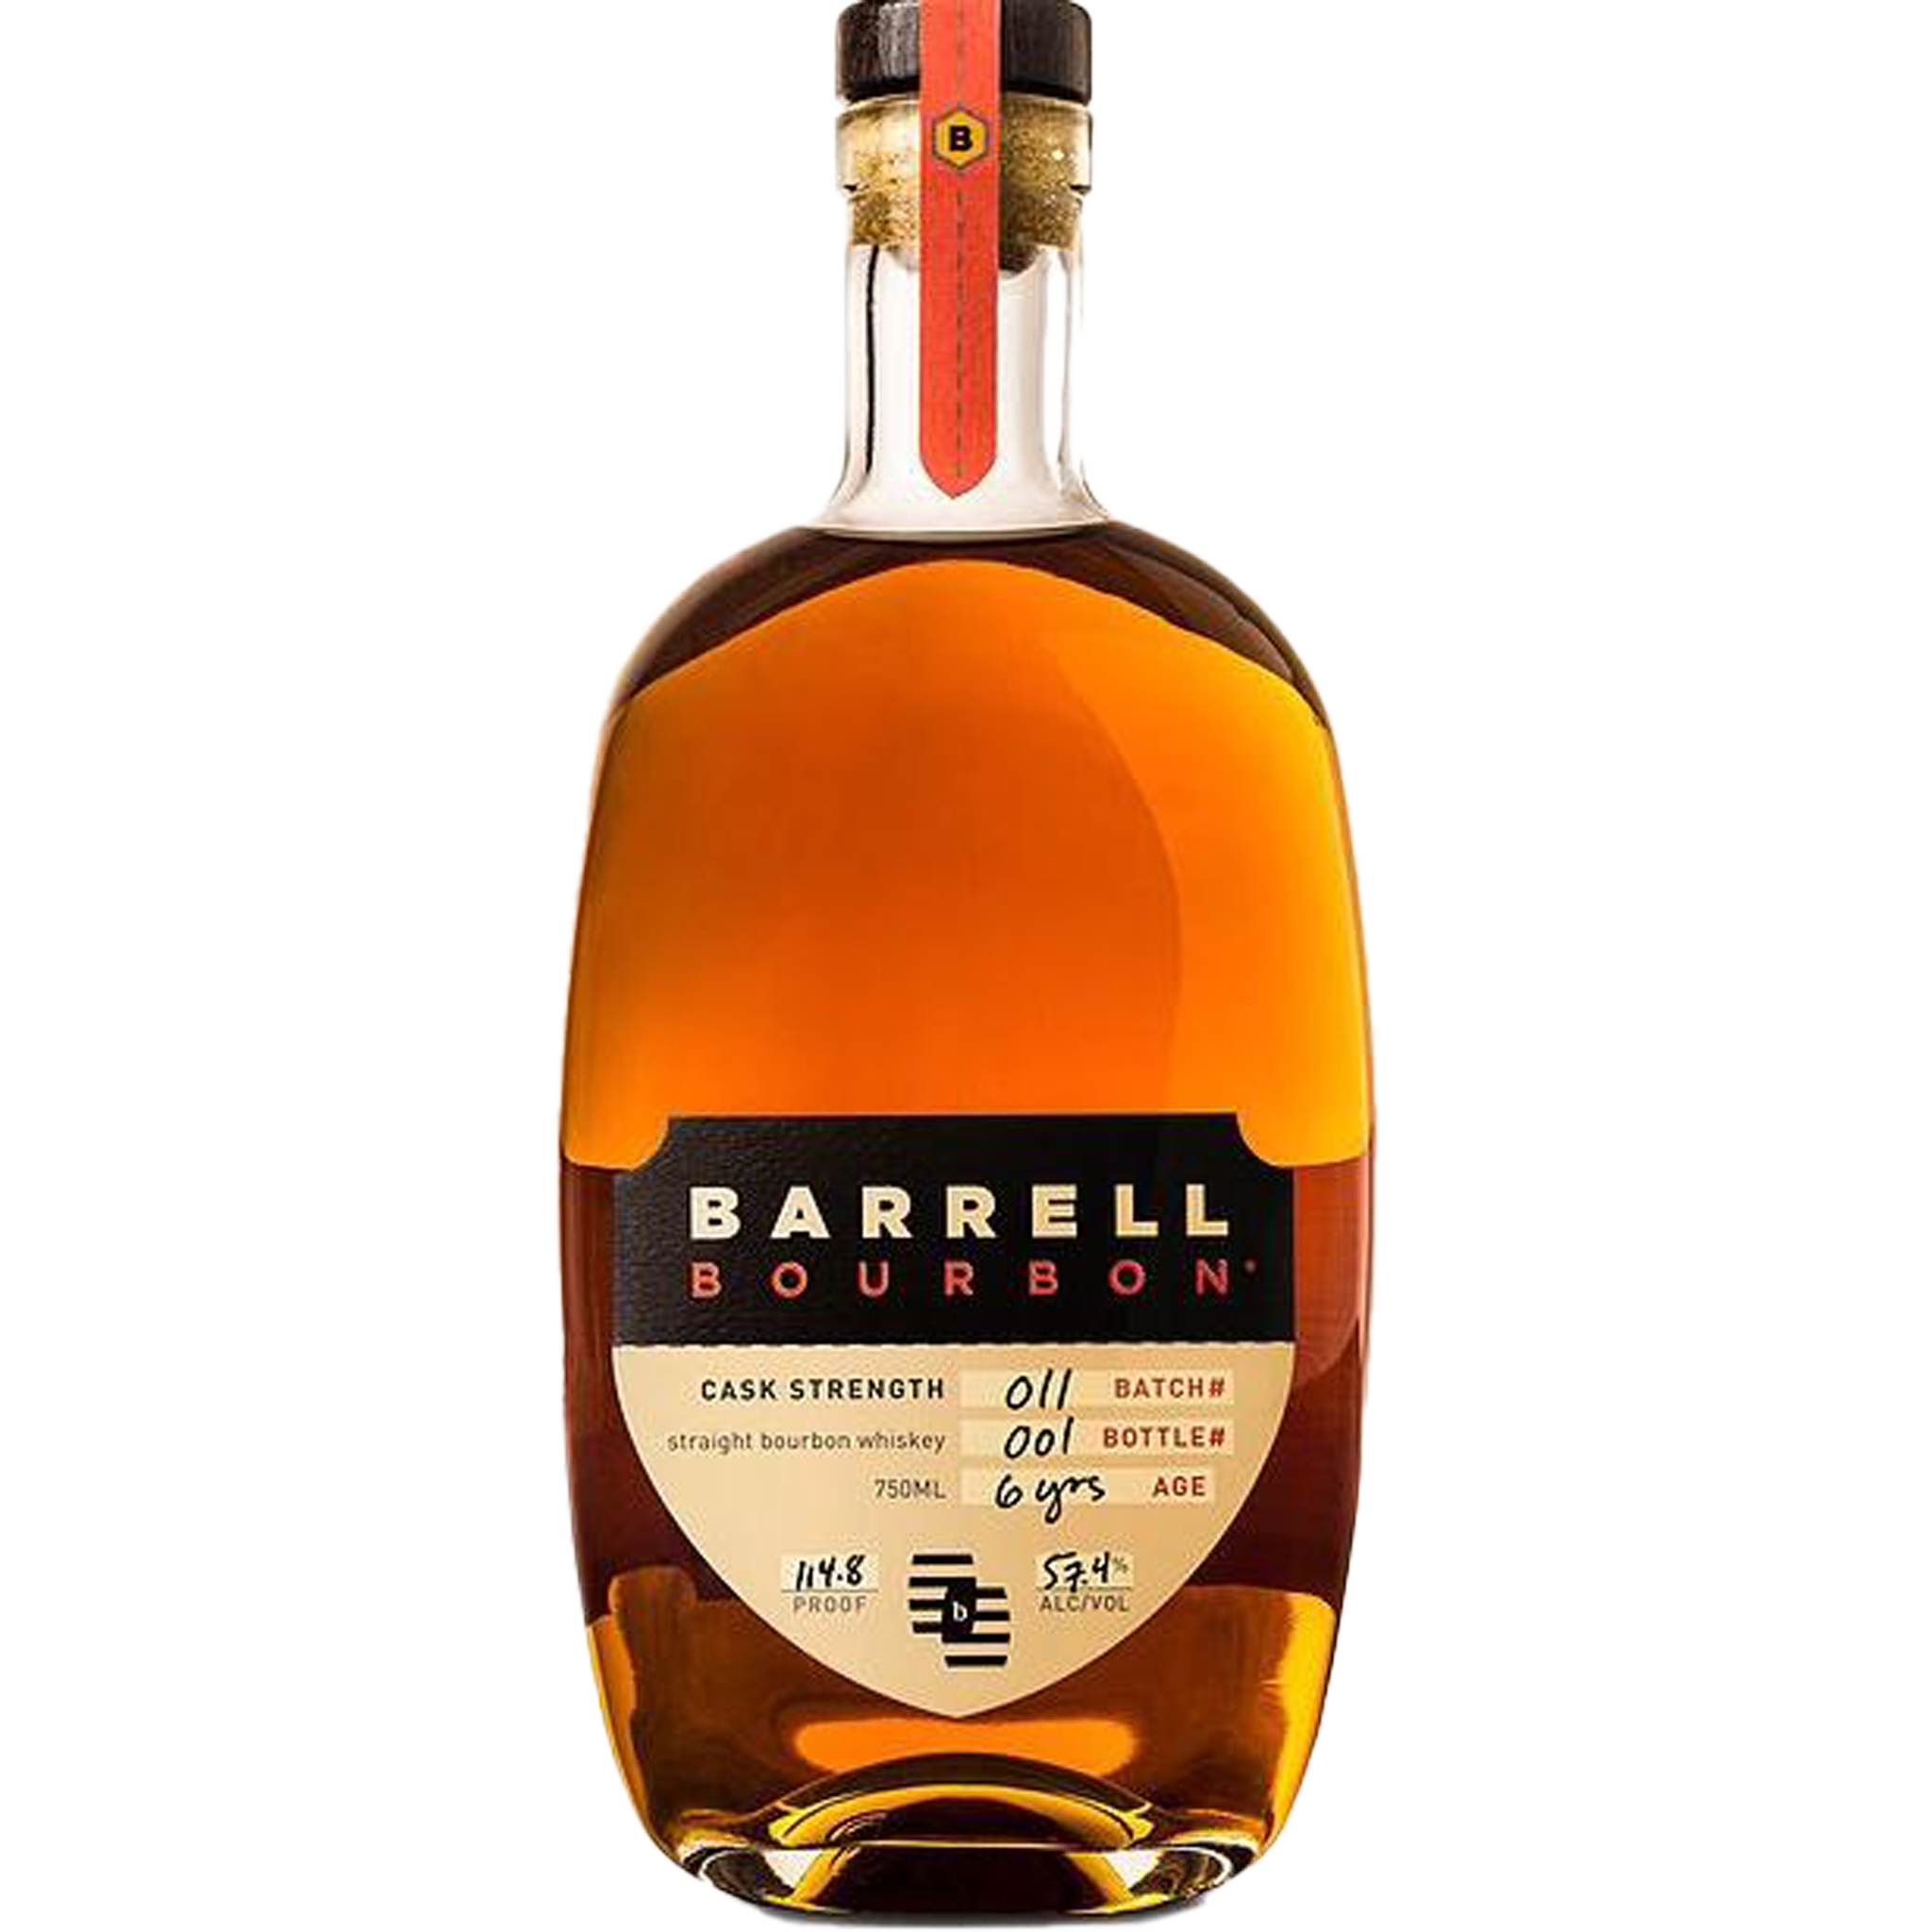 Barrell Bourbon Single Barrel Cask Strength 14 Years